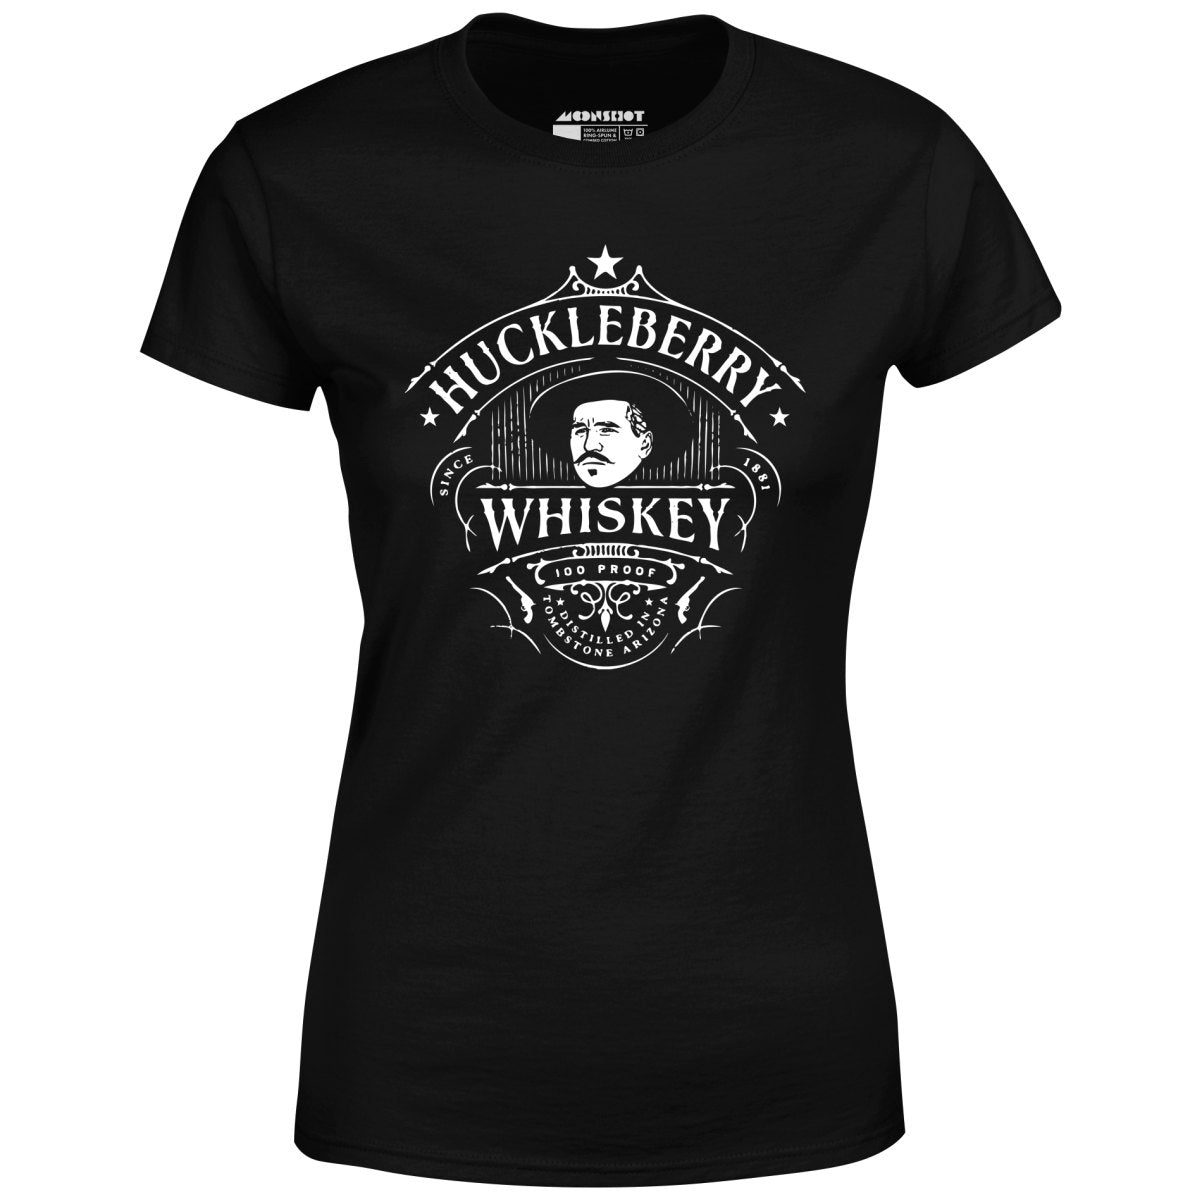 Huckleberry Whiskey - Women's T-Shirt